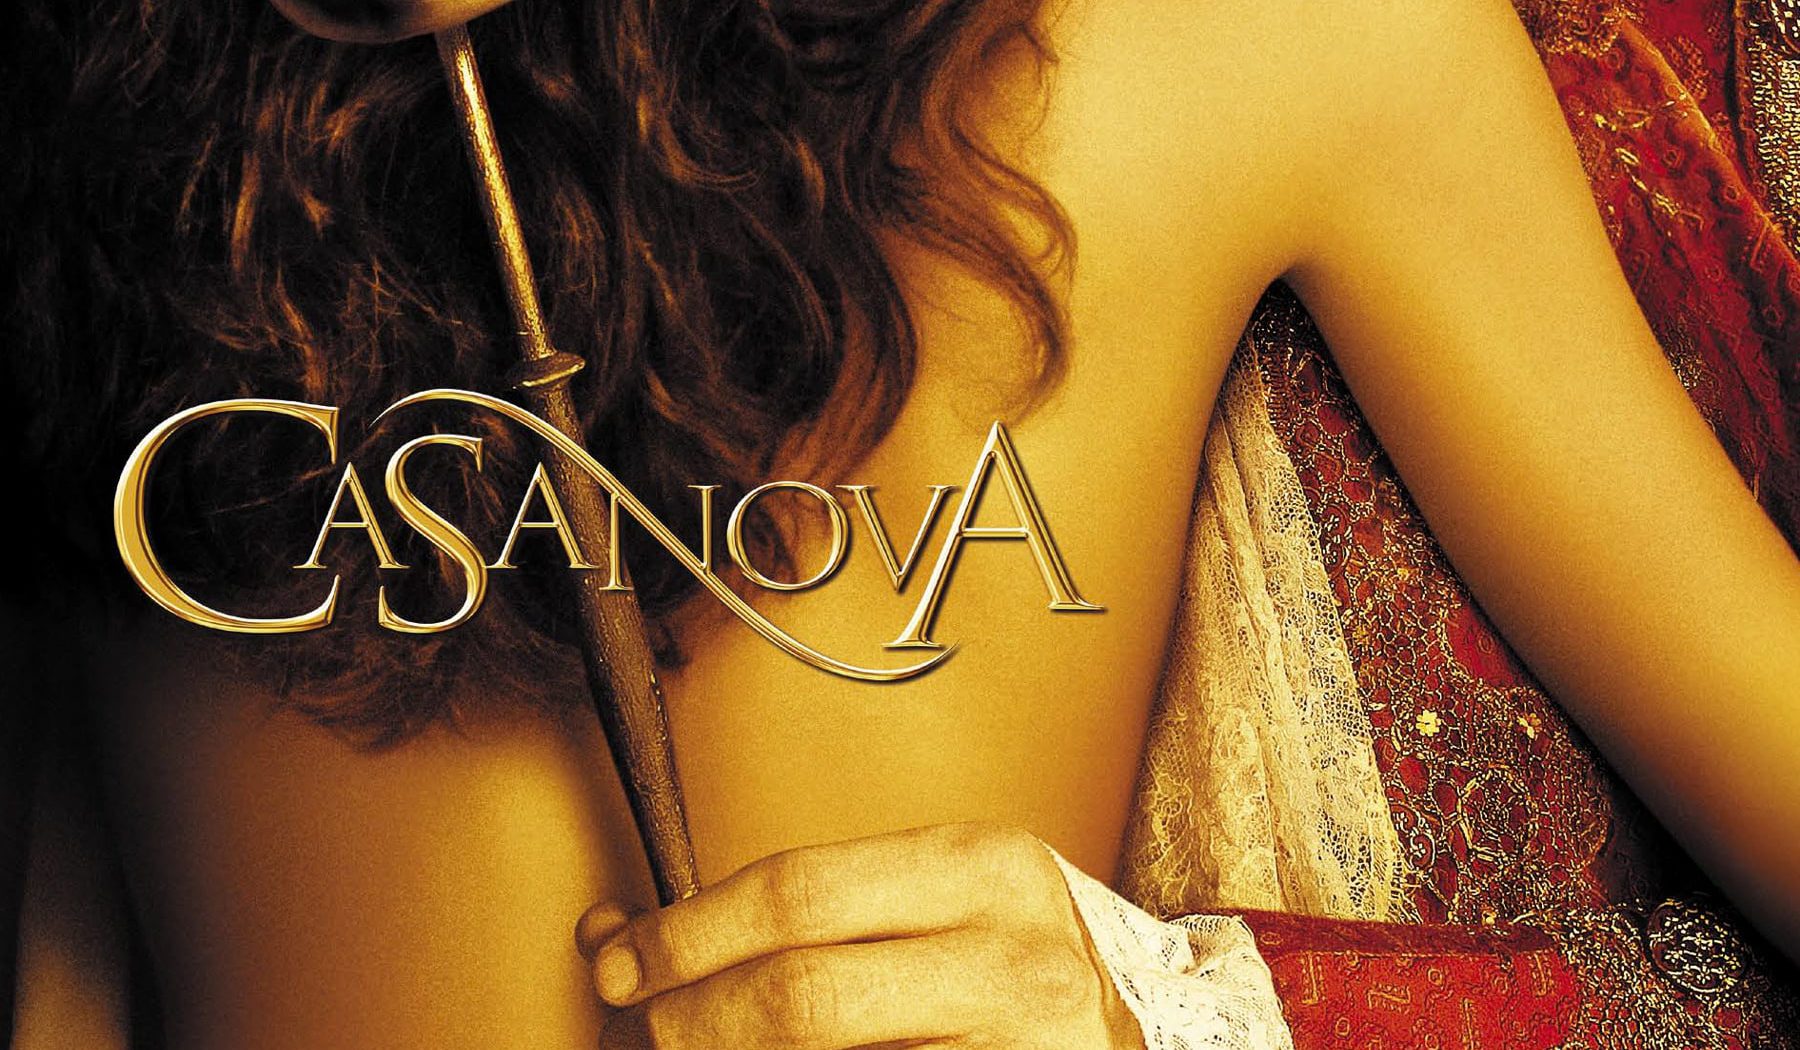 Poster for the movie "Casanova"